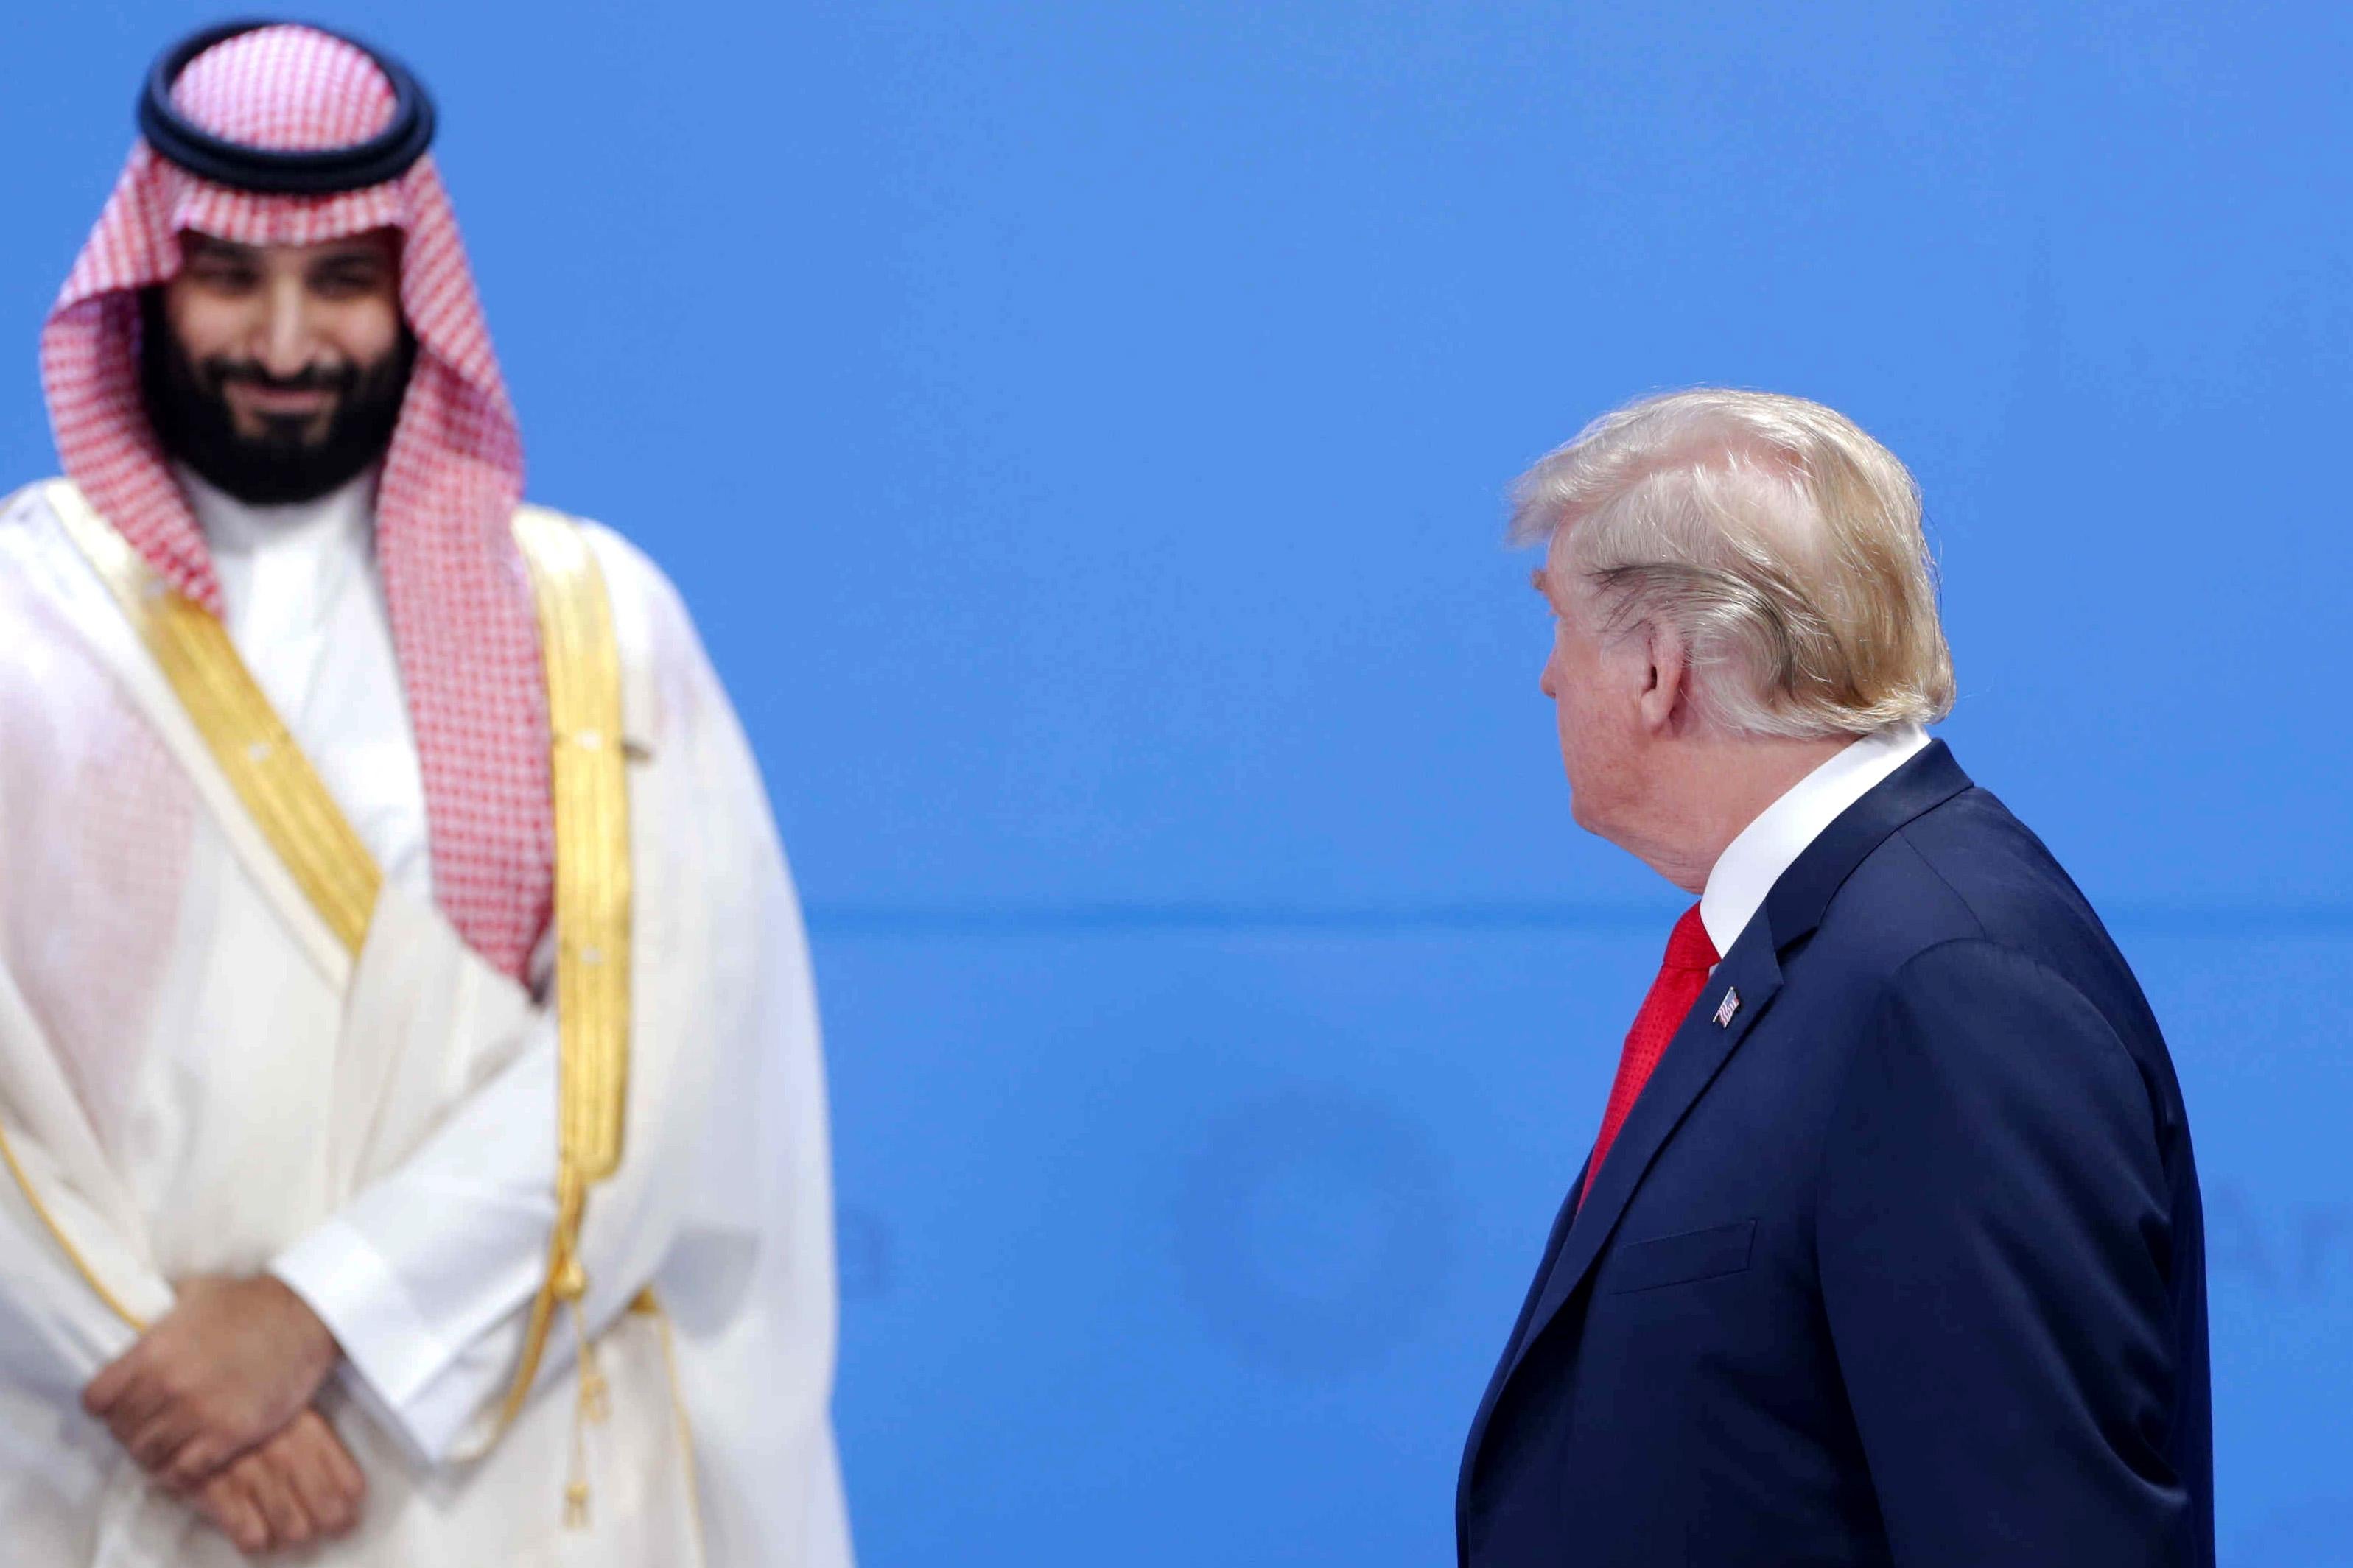 President Donald Trump looks over at Crown Prince of Saudi Arabia Mohammad bin Salman during a G-20 summit.